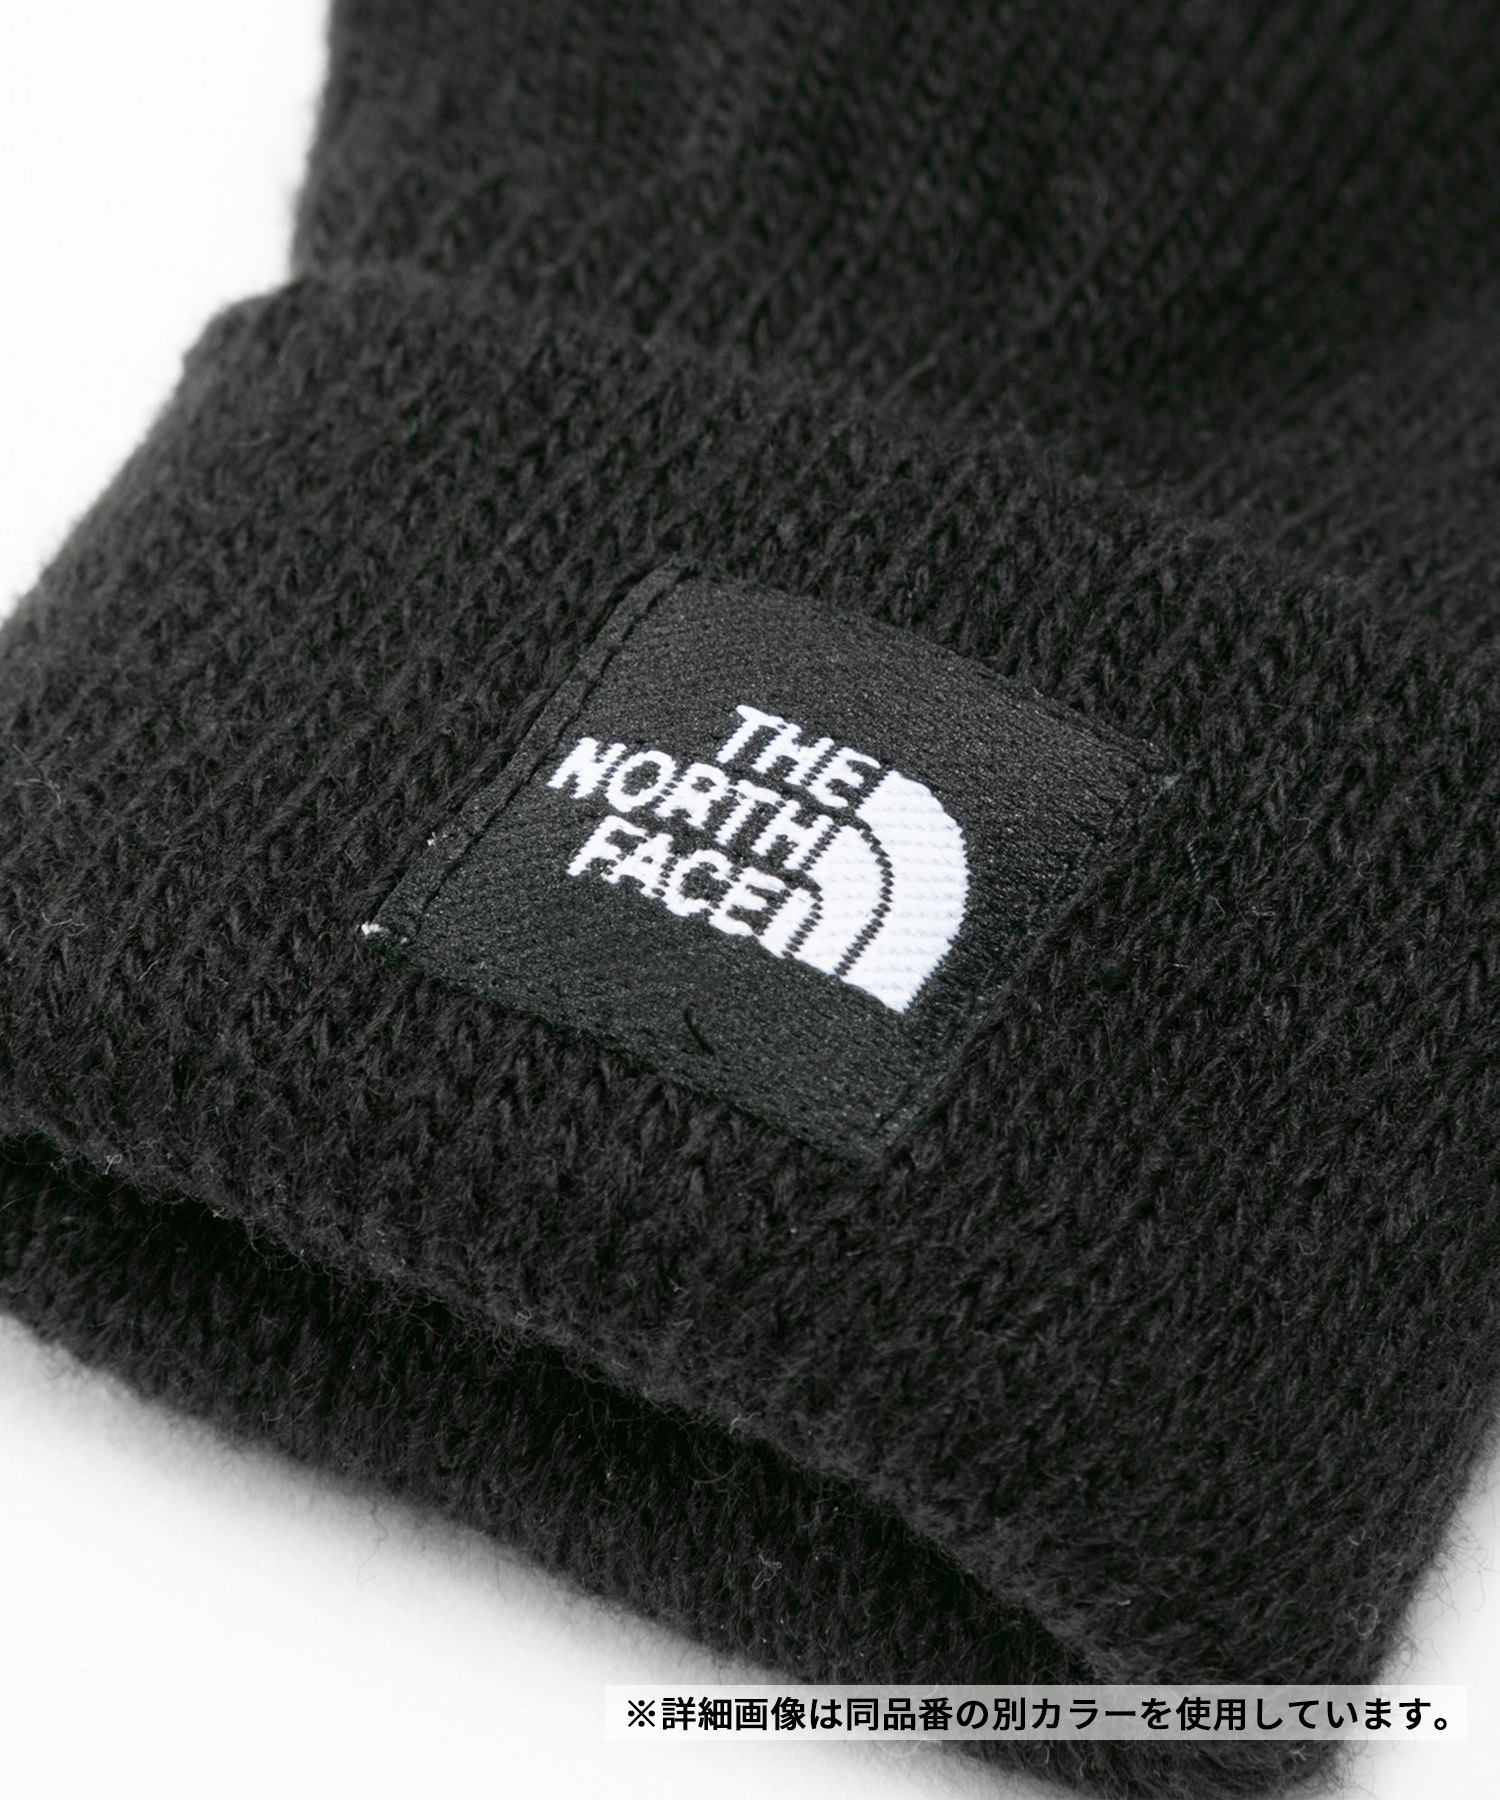 THE NORTH FACE/ザ・ノース・フェイス Kids’ Knit Glove ニットグローブ キッズ 手袋 ニュートープ NNJ62200 NT(NT-FREE)